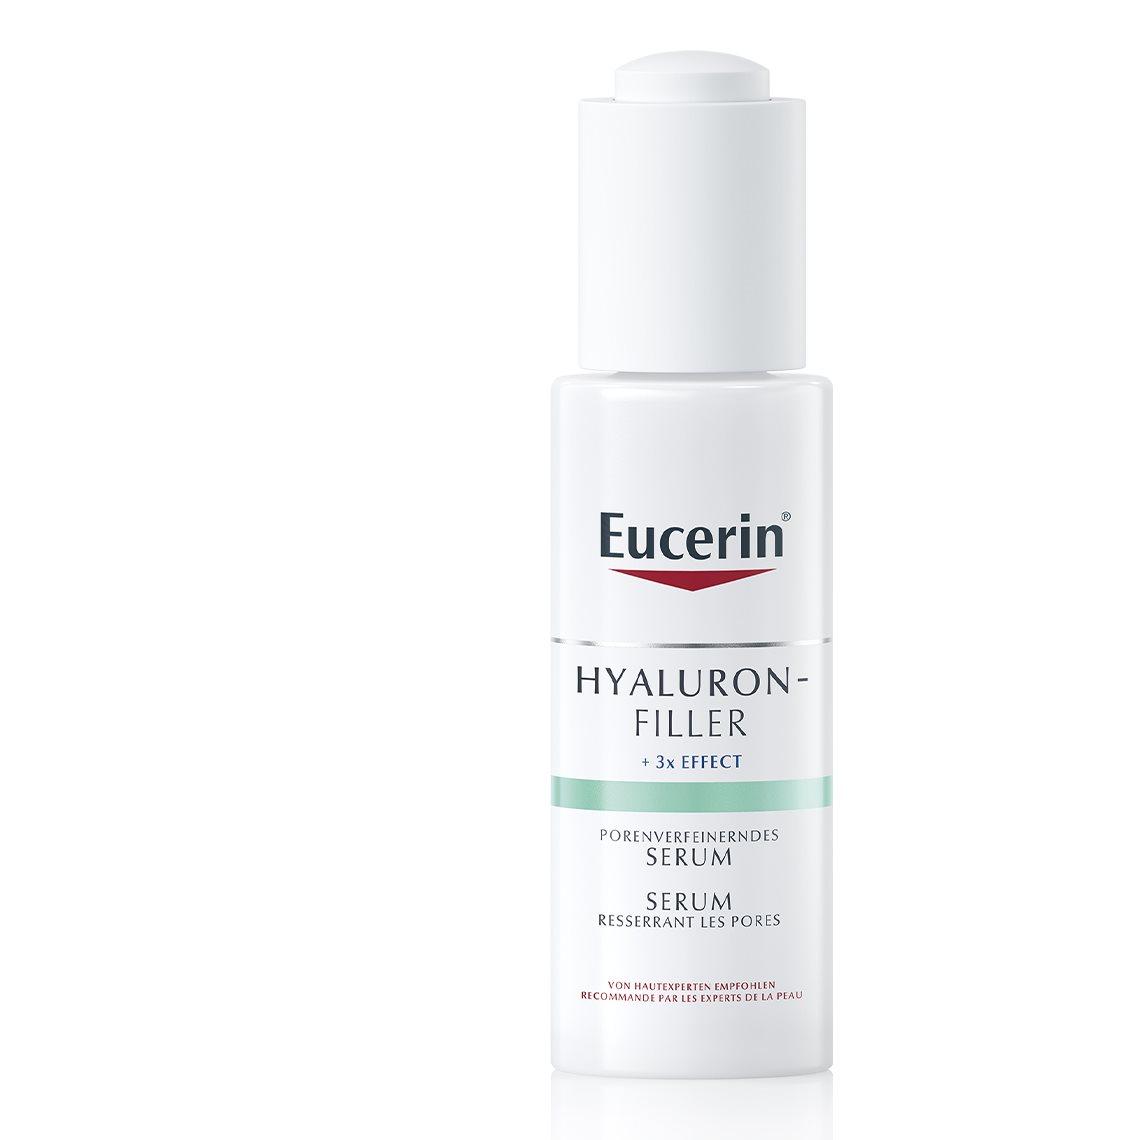 Eucerin HYALURON-FILLER Sérum resserrant les pores